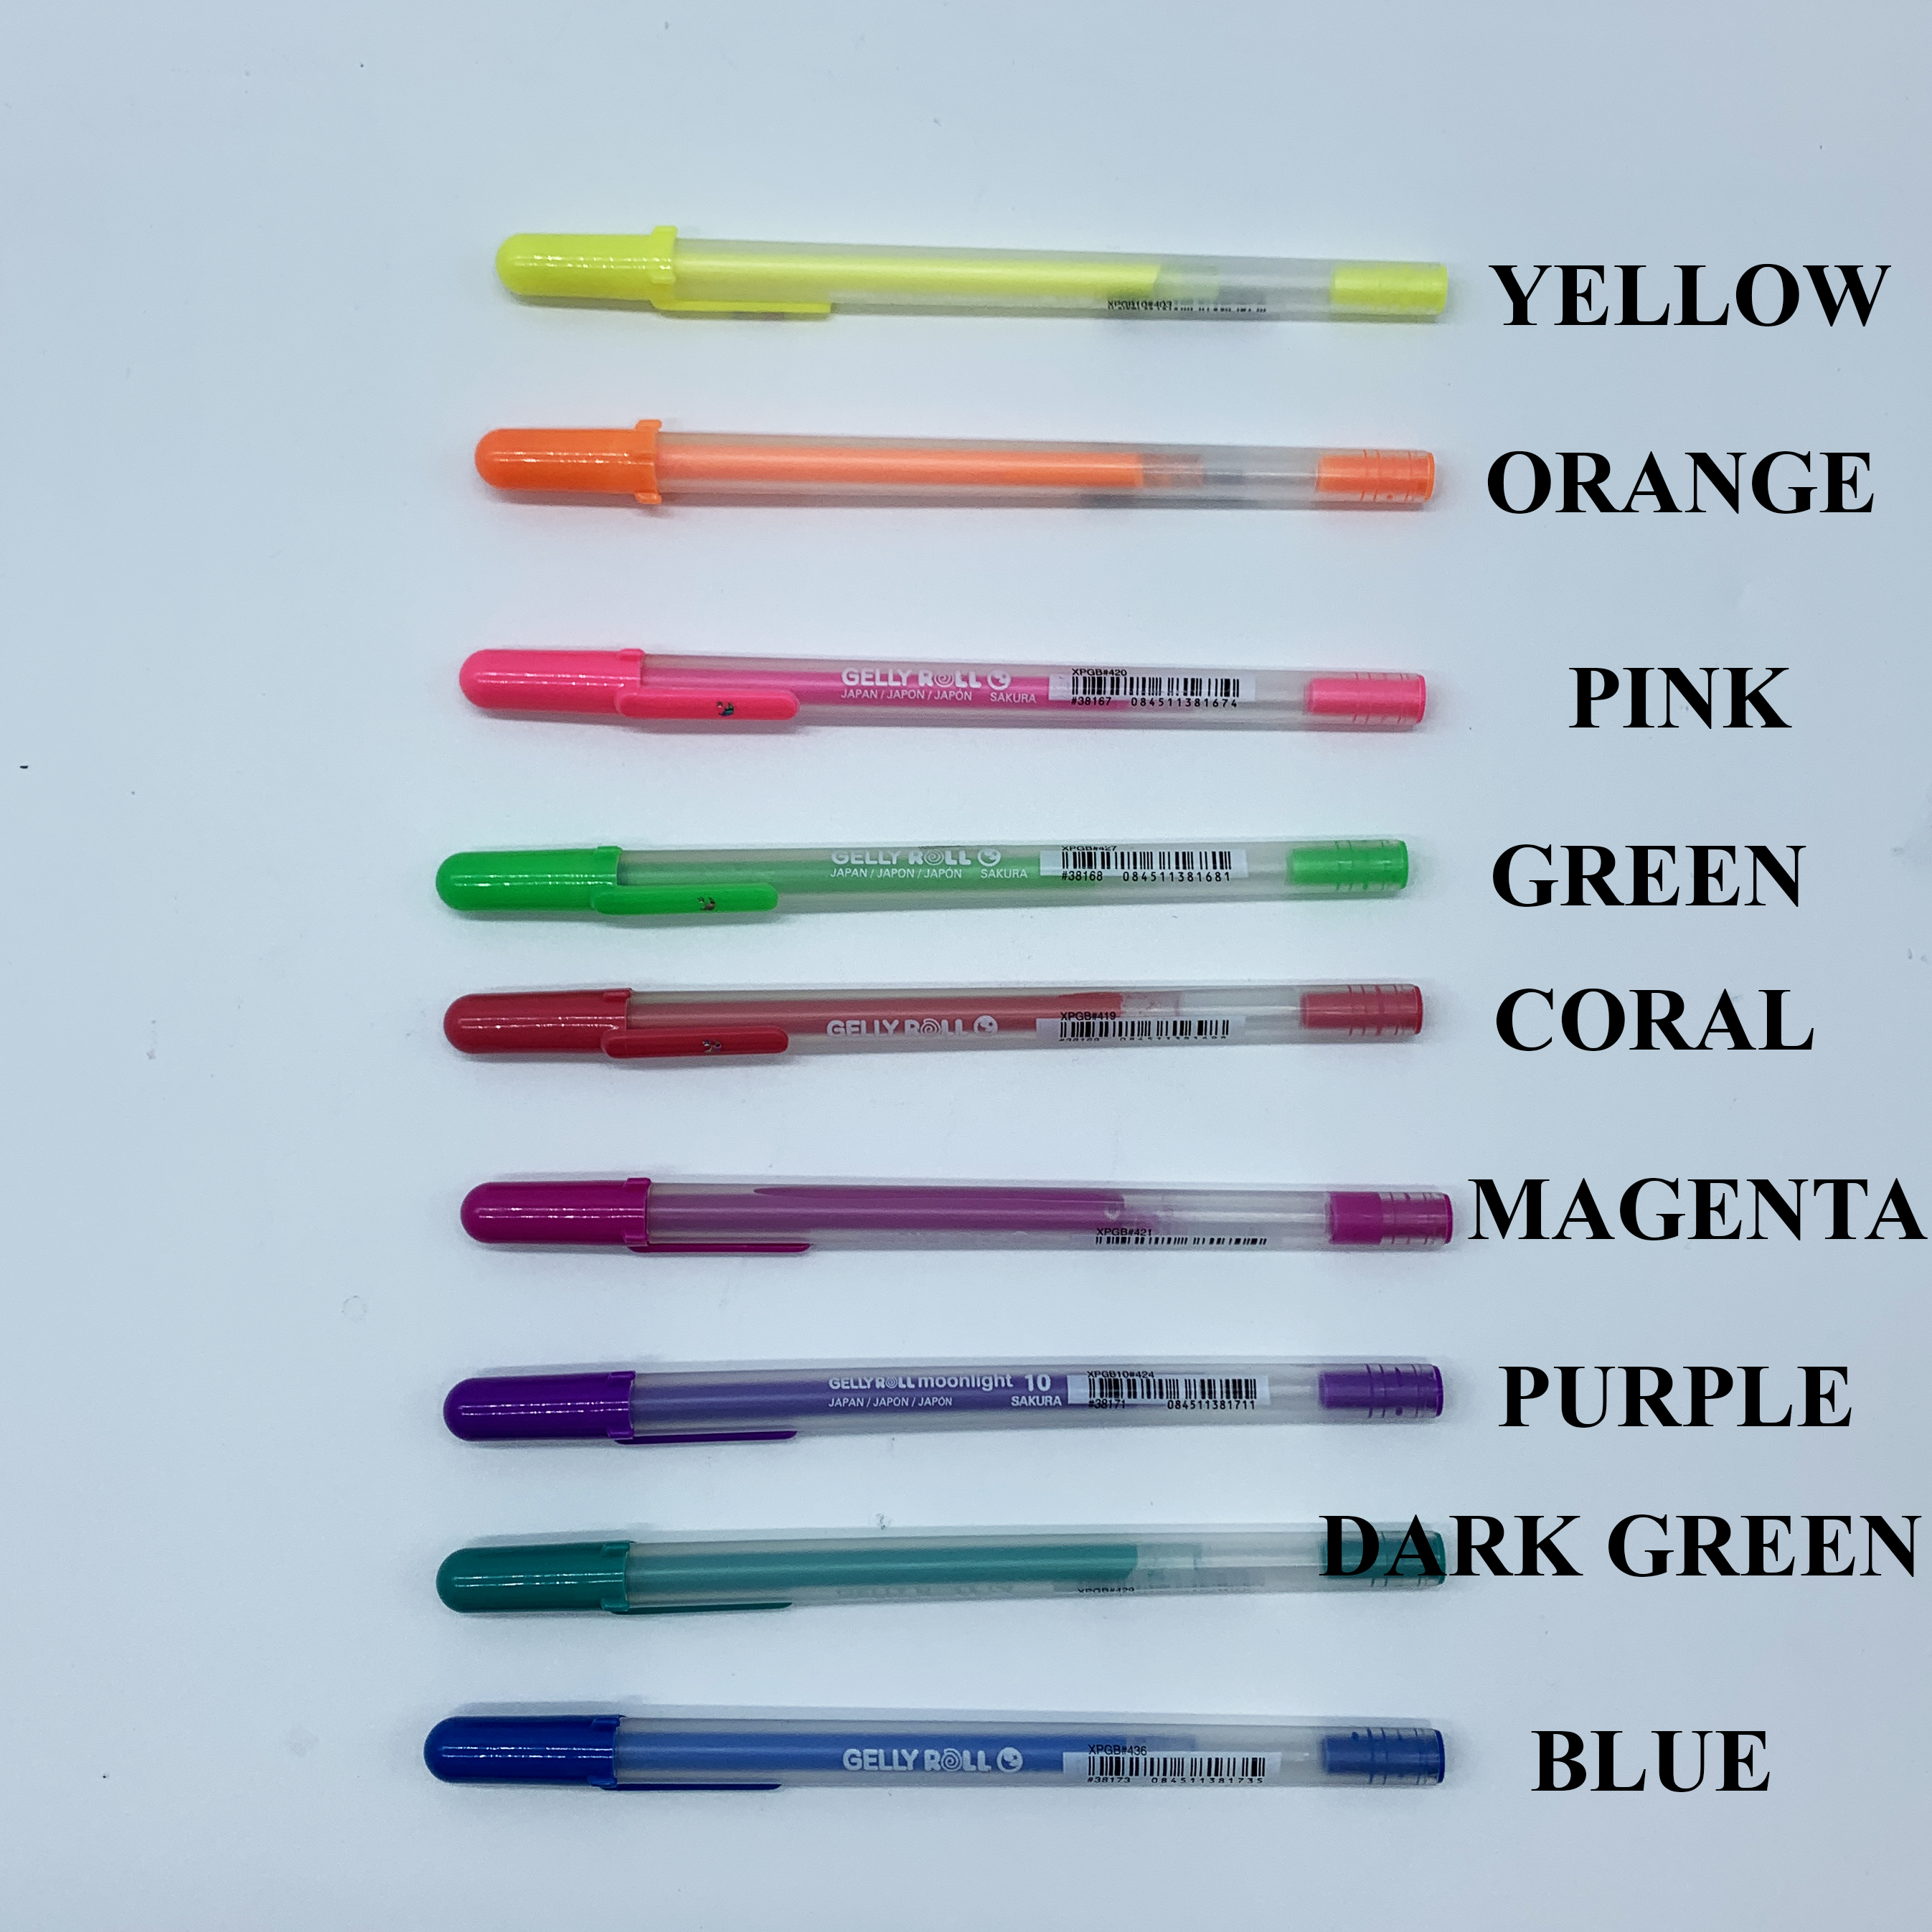 38168 Sakura Gelly Roll Moonlight Gel Pen, Fluorescent Green, 1.0